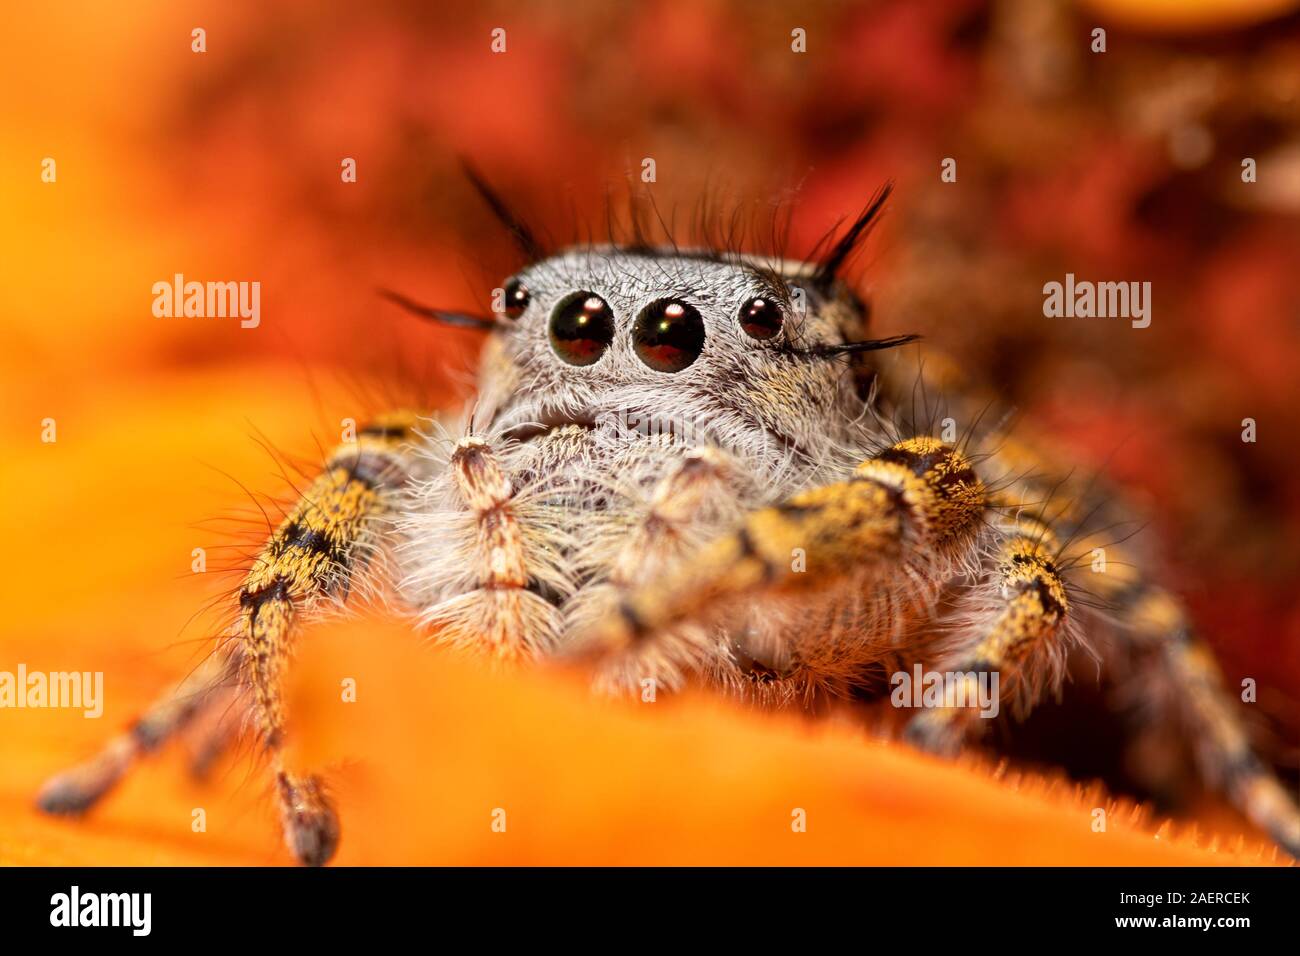 Beautiful female High Eyelashed Jumping Spider, Phidippus mystaceus, peeking out of an orange Zinnia flower Stock Photo